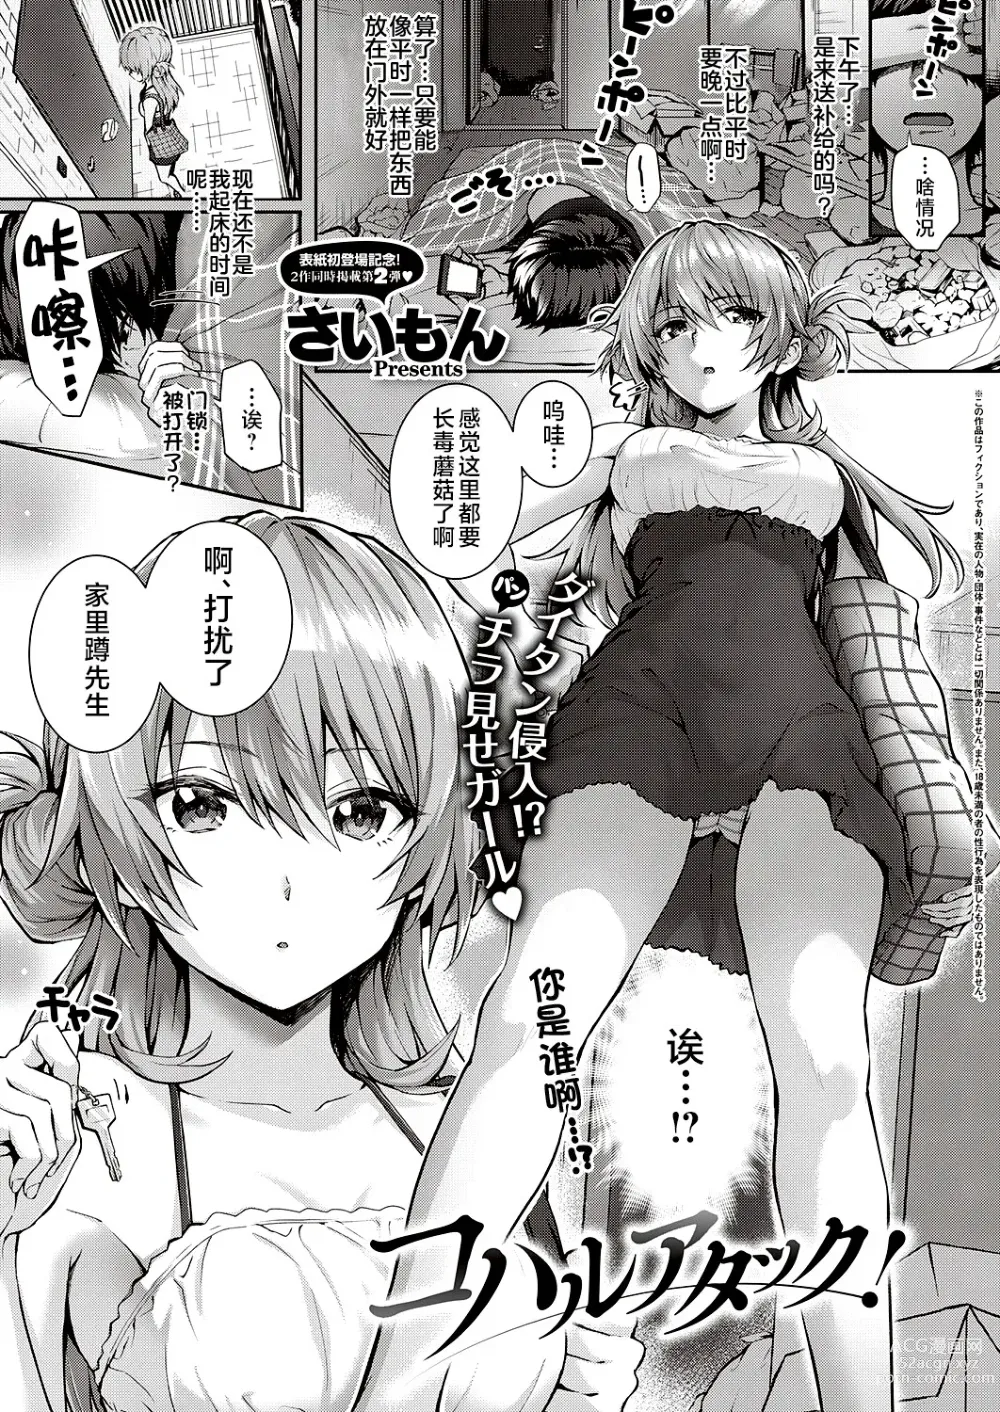 Page 1 of manga Koharu Attack